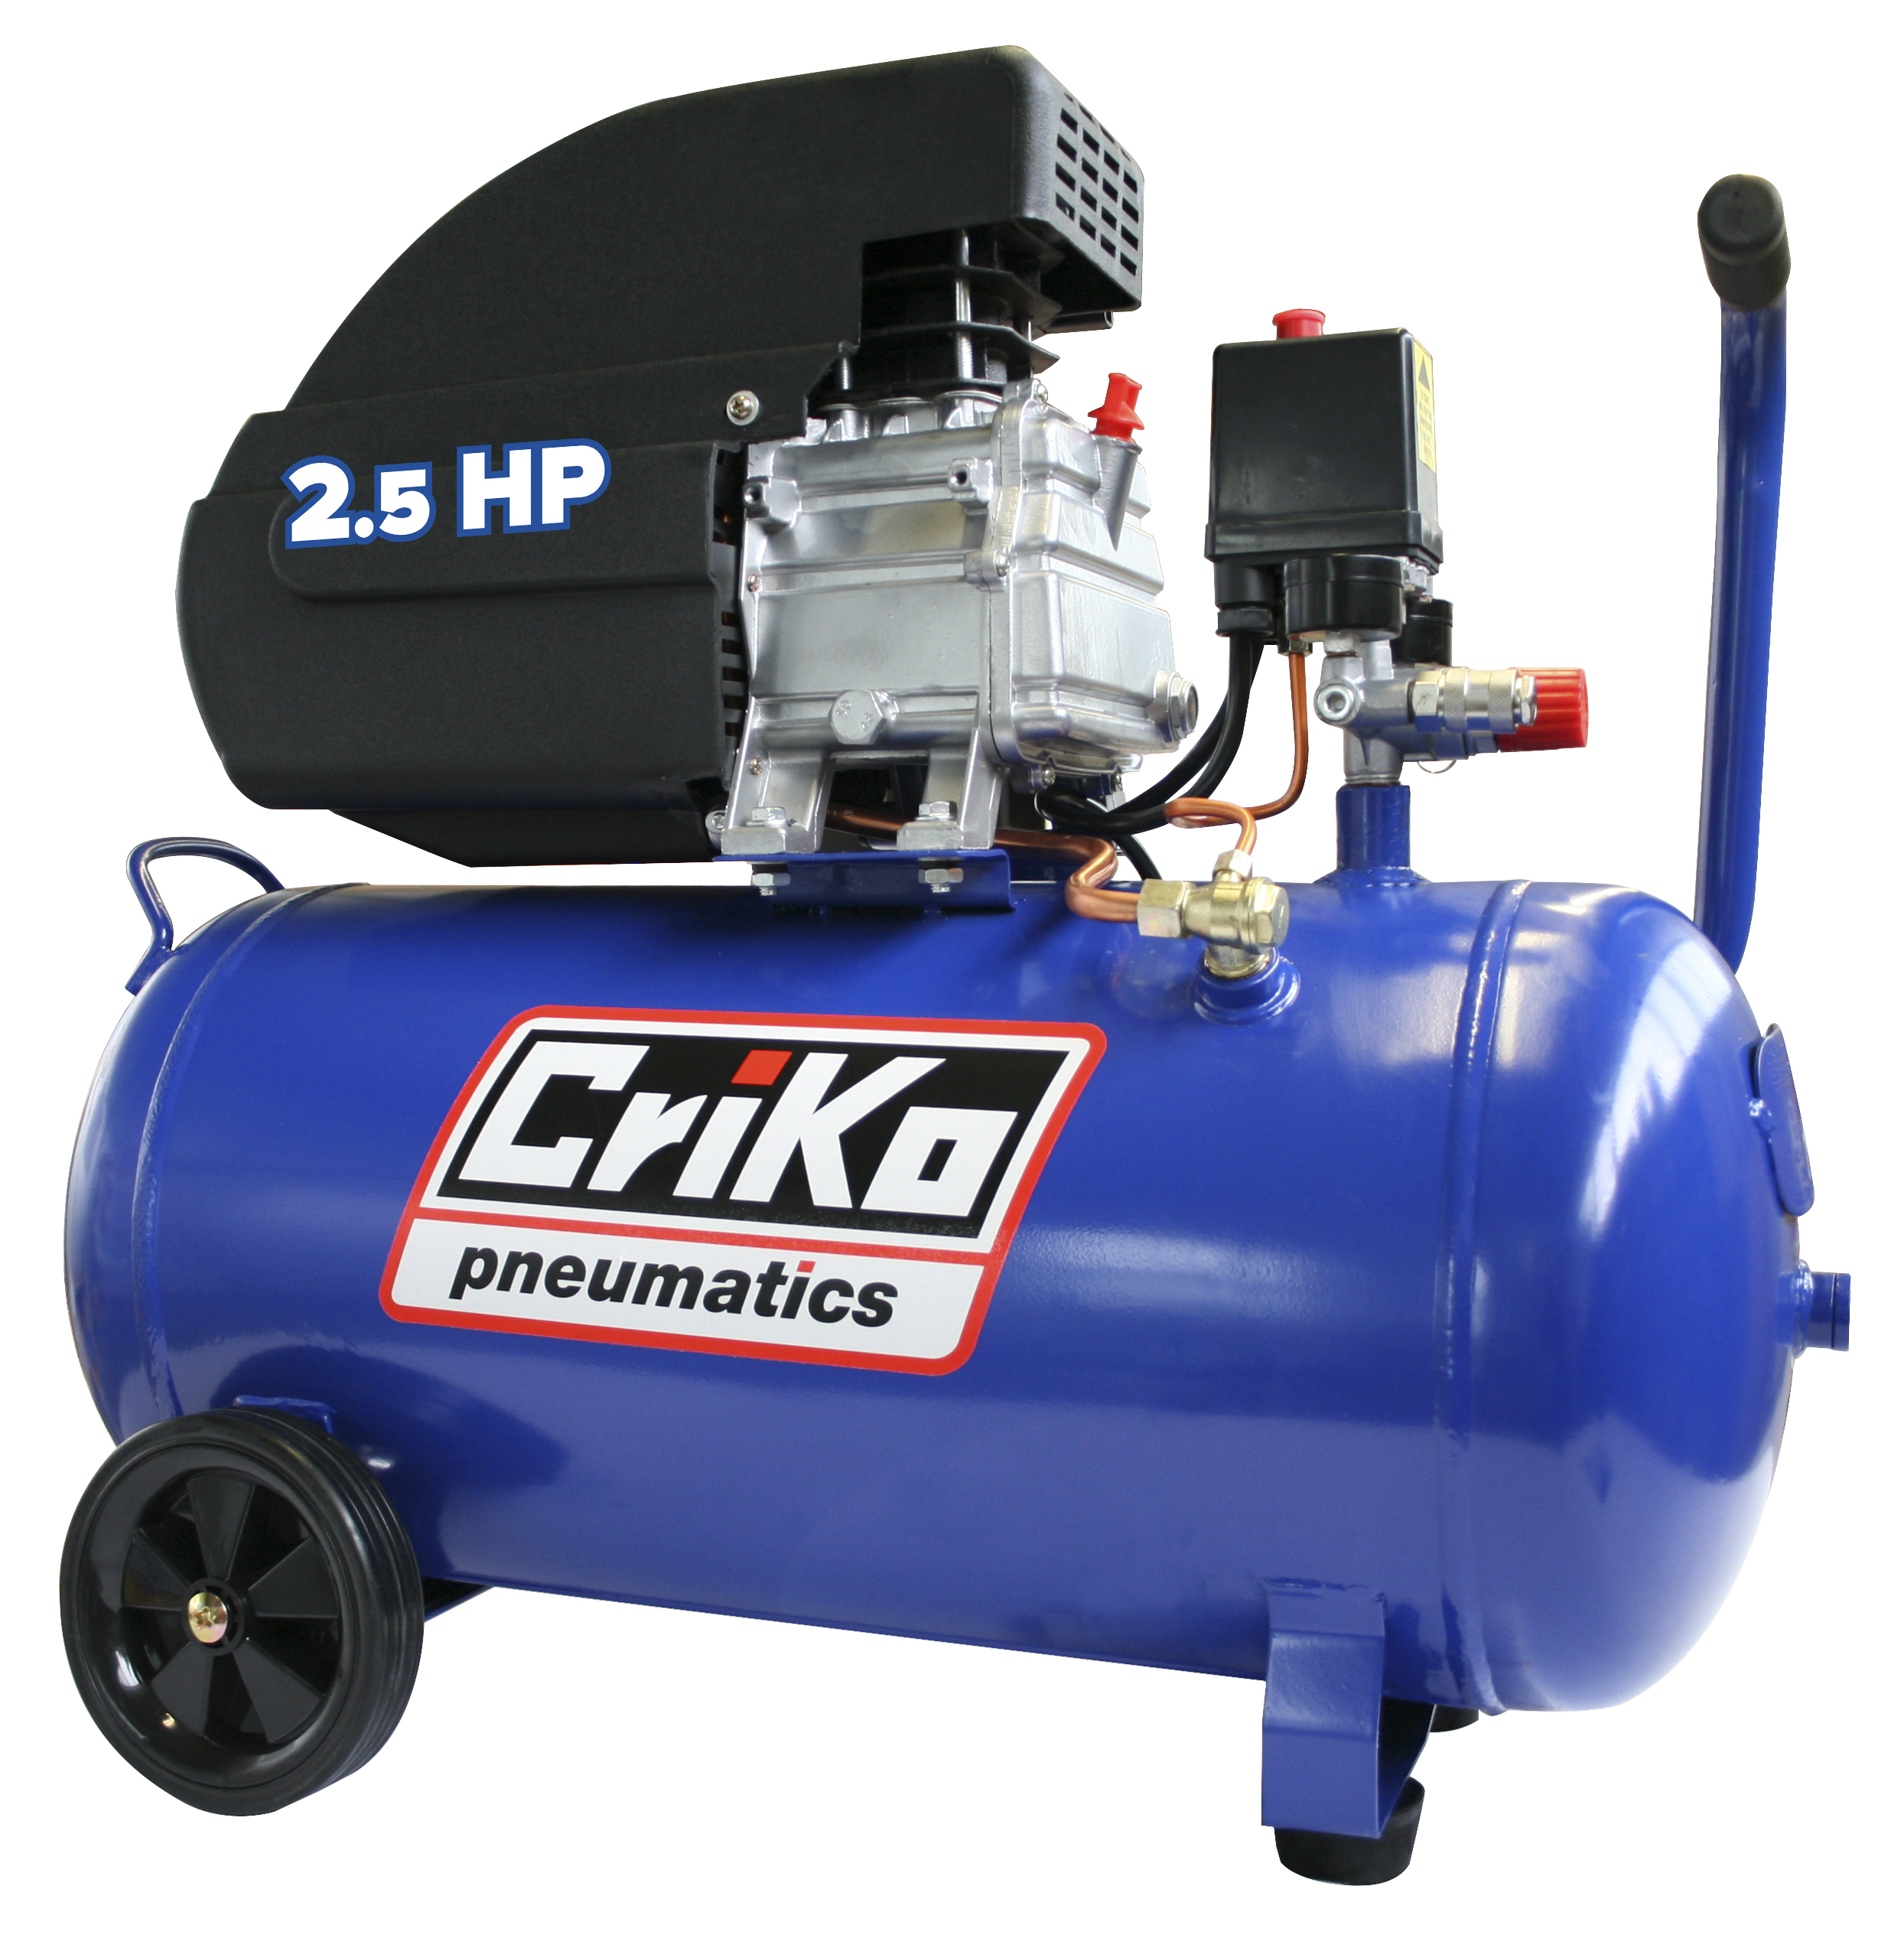 condensor dagboek artikel Criko compressor met olie 50L 2,5PK